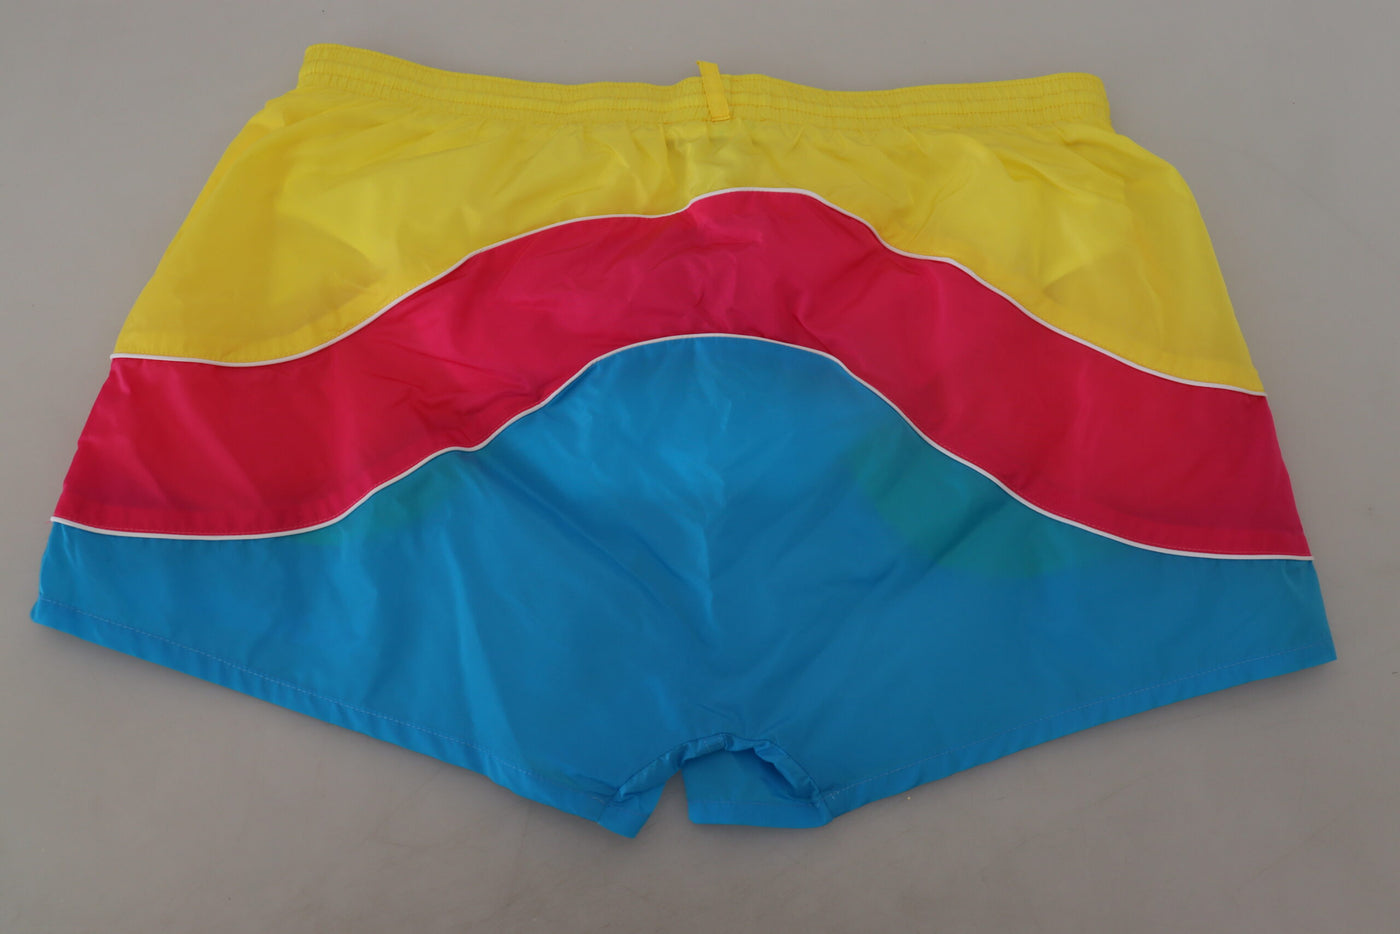 Dsquared² Multicolor Logo Print Men Beachwear Shorts Swimwear